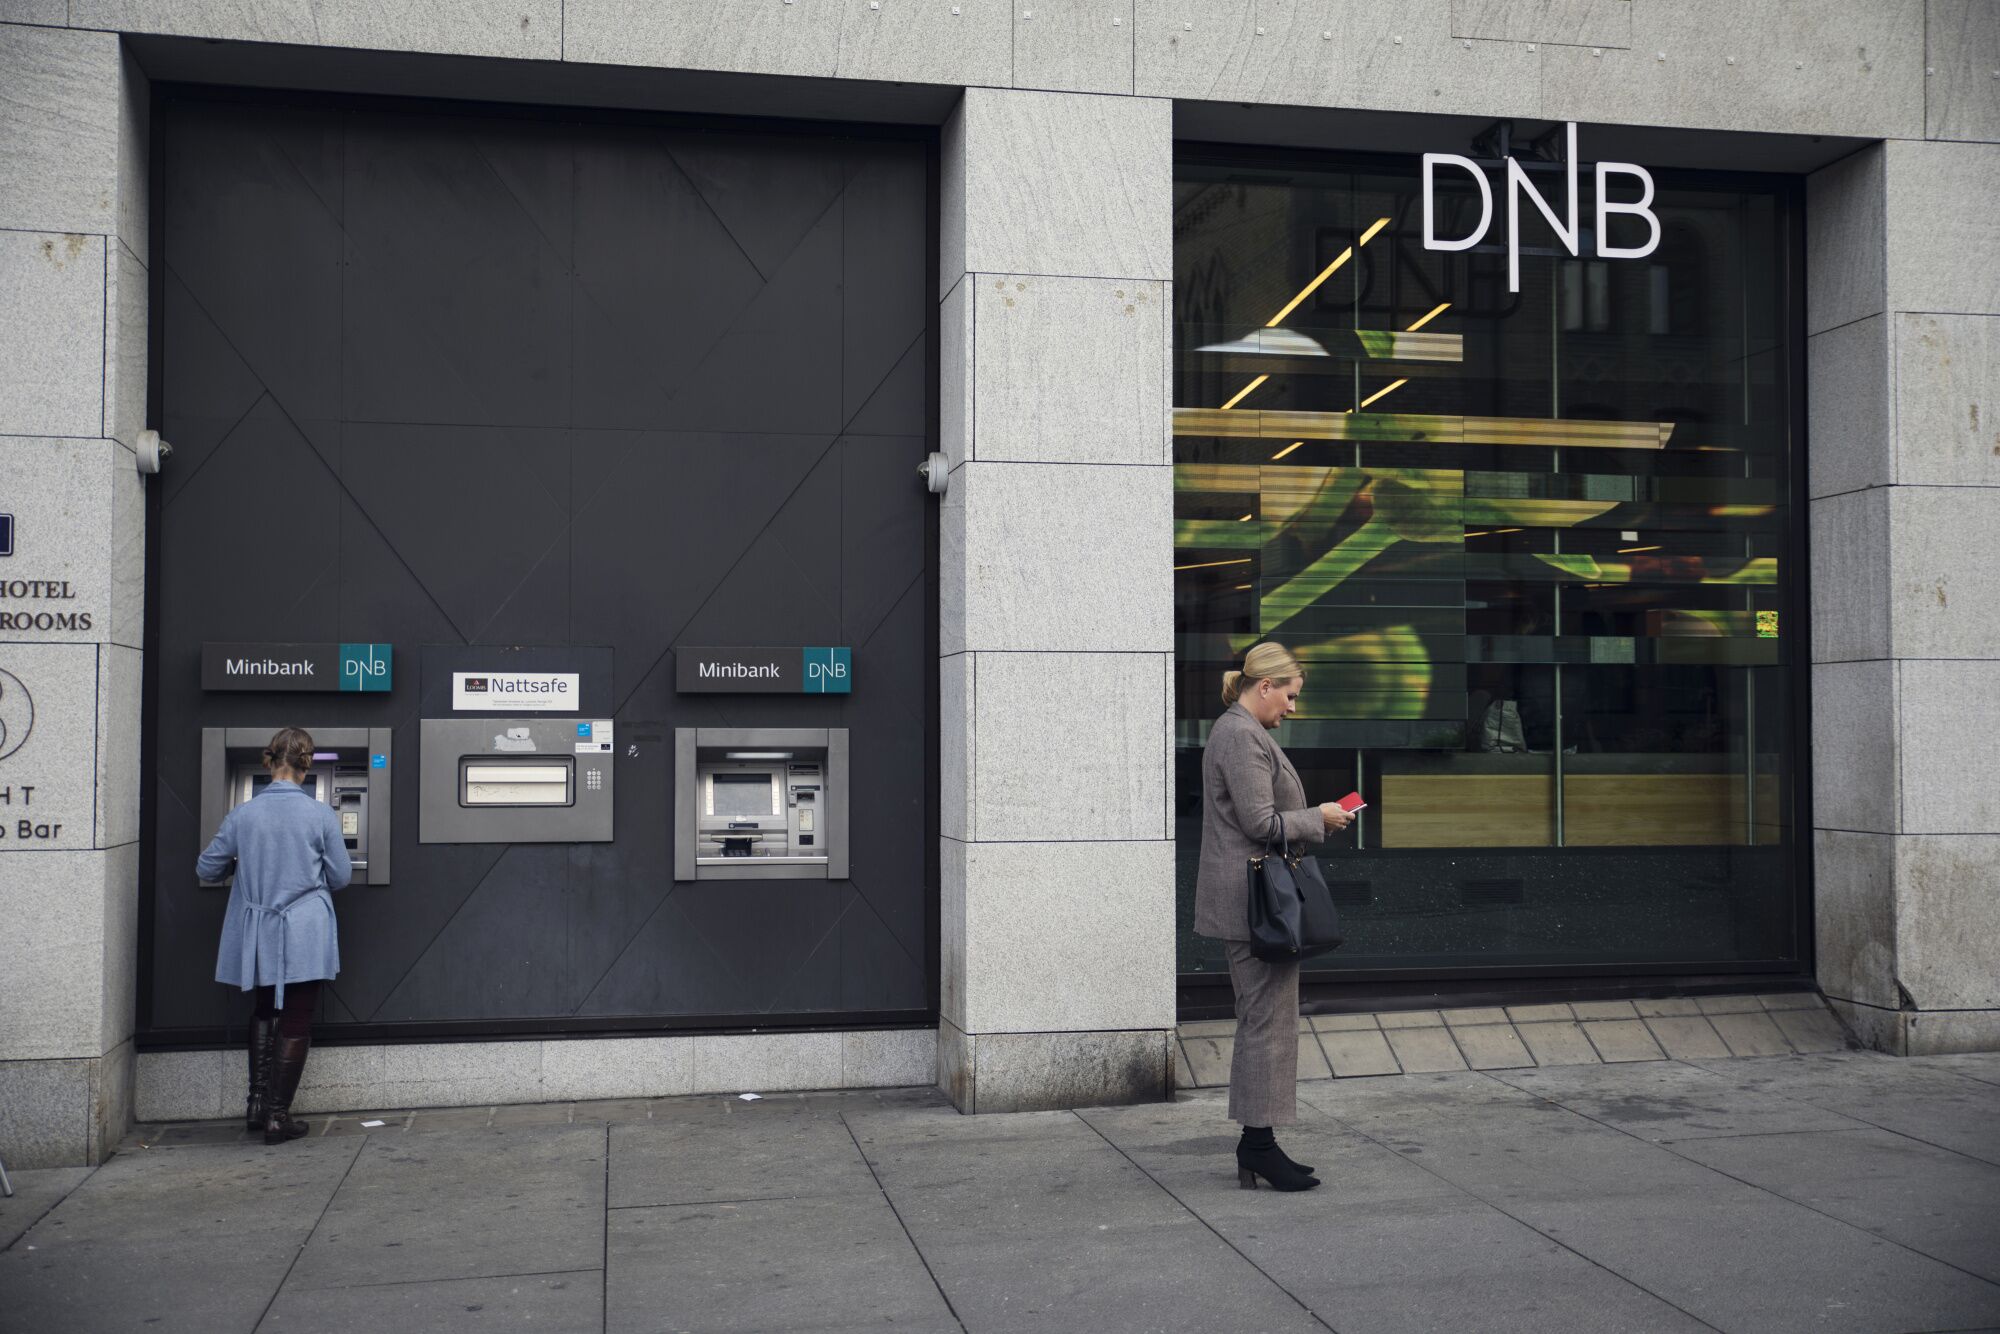 Нордик банк. DNB Норвегия. Банки Норвегии. DNB банк. Норвежский банк.